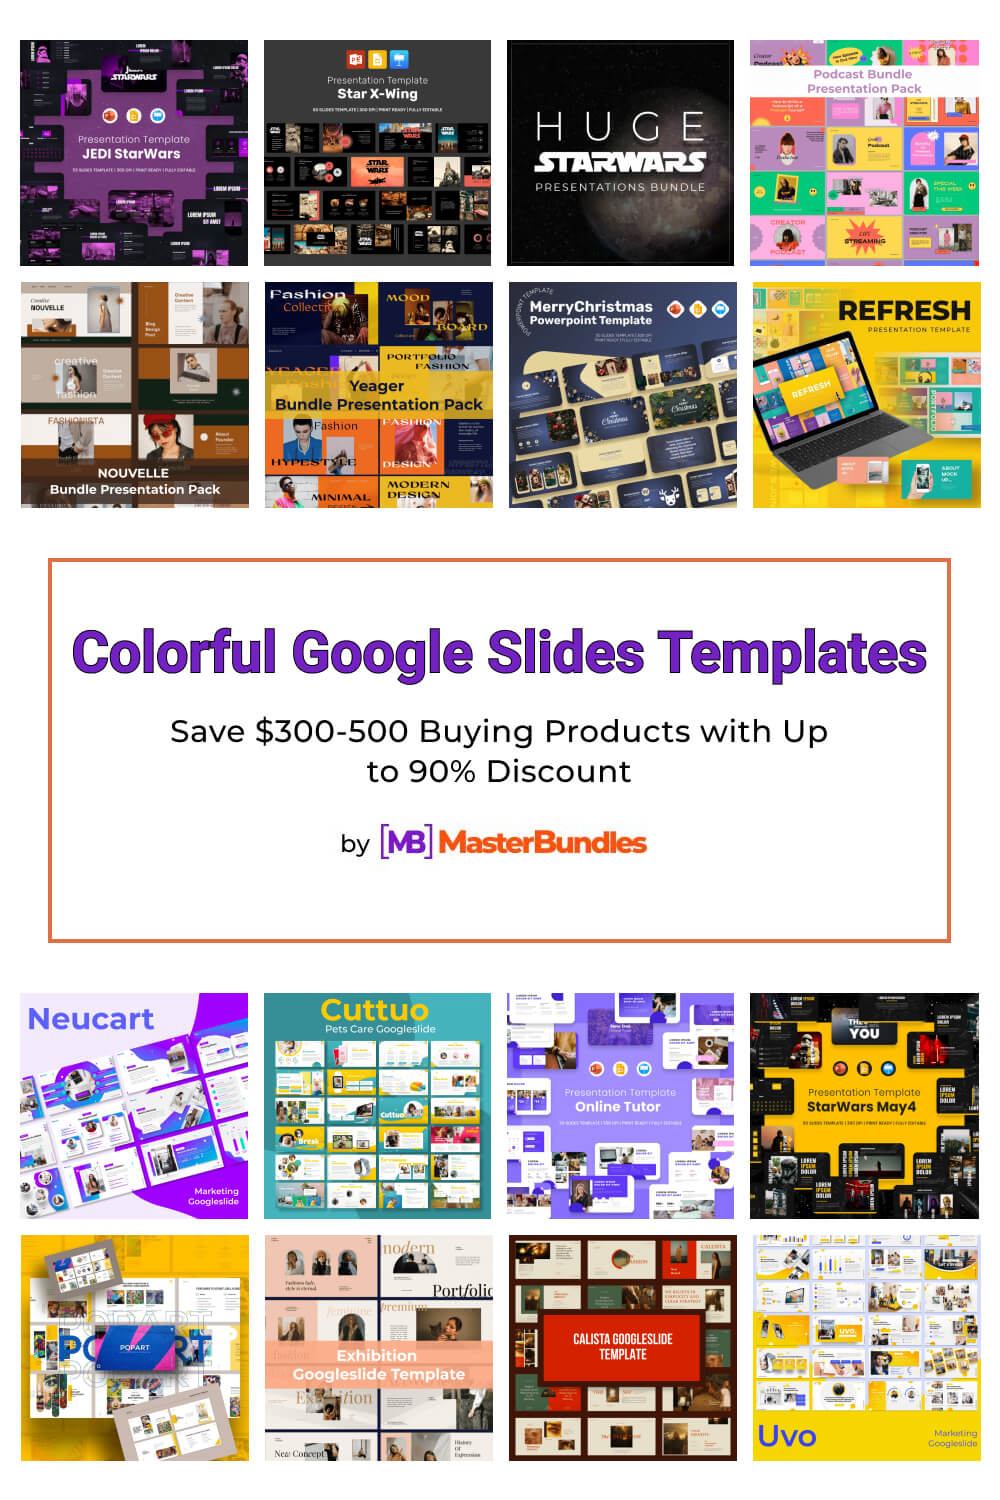 colorful google slides templates pinterest image.